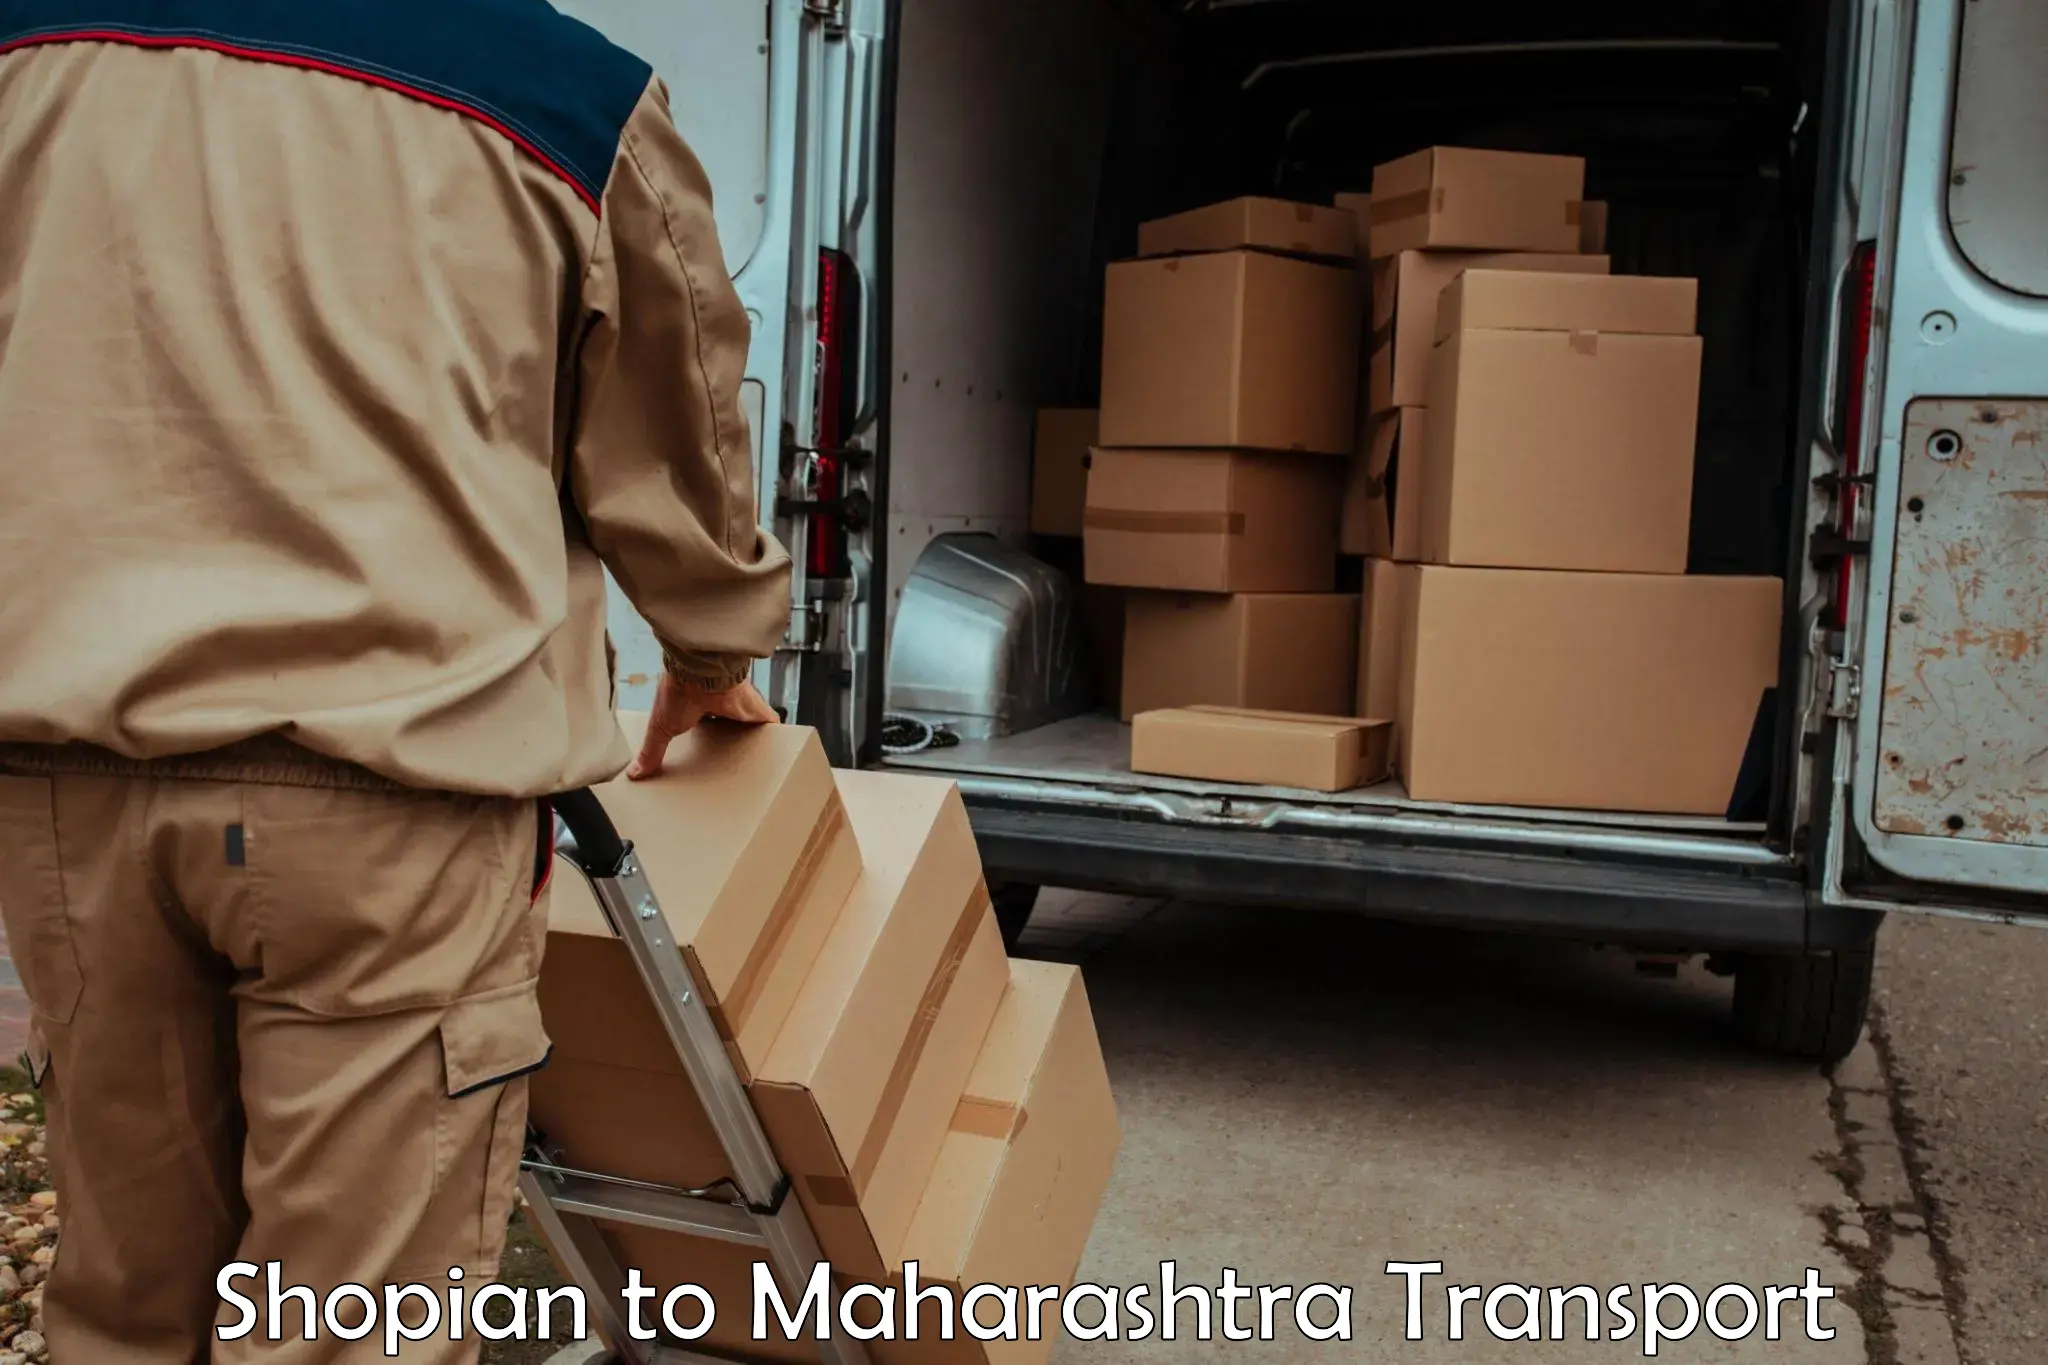 Furniture transport service Shopian to Ahmedpur